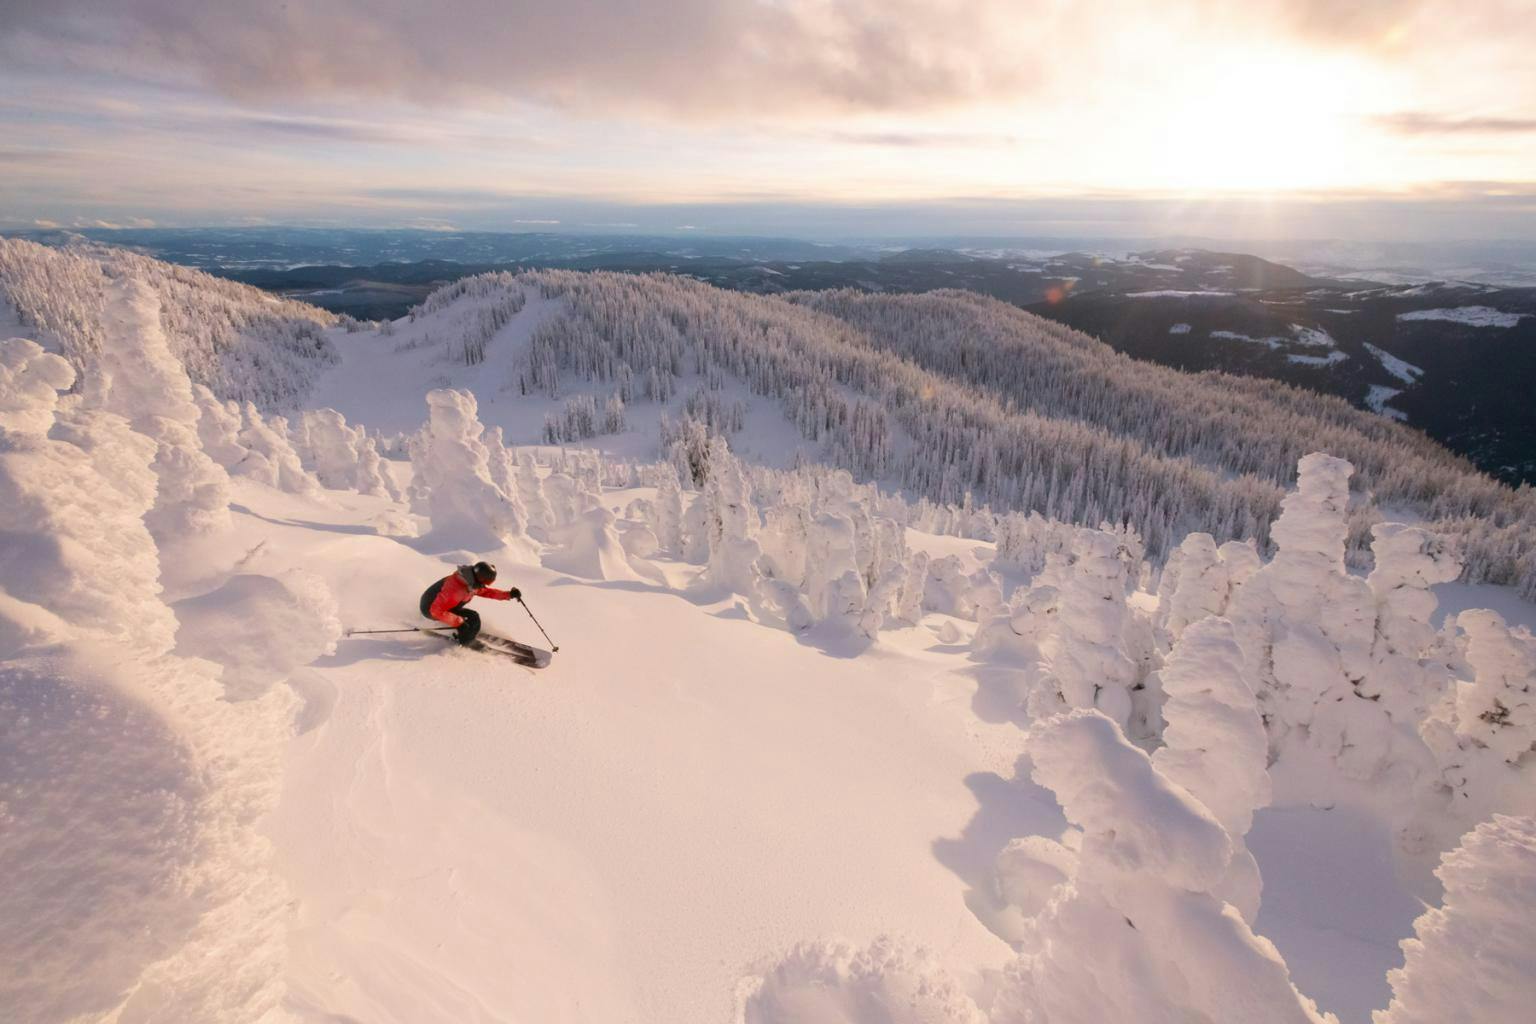 .Sun Peaks Resort - best ski resorts in Canada ratepunk